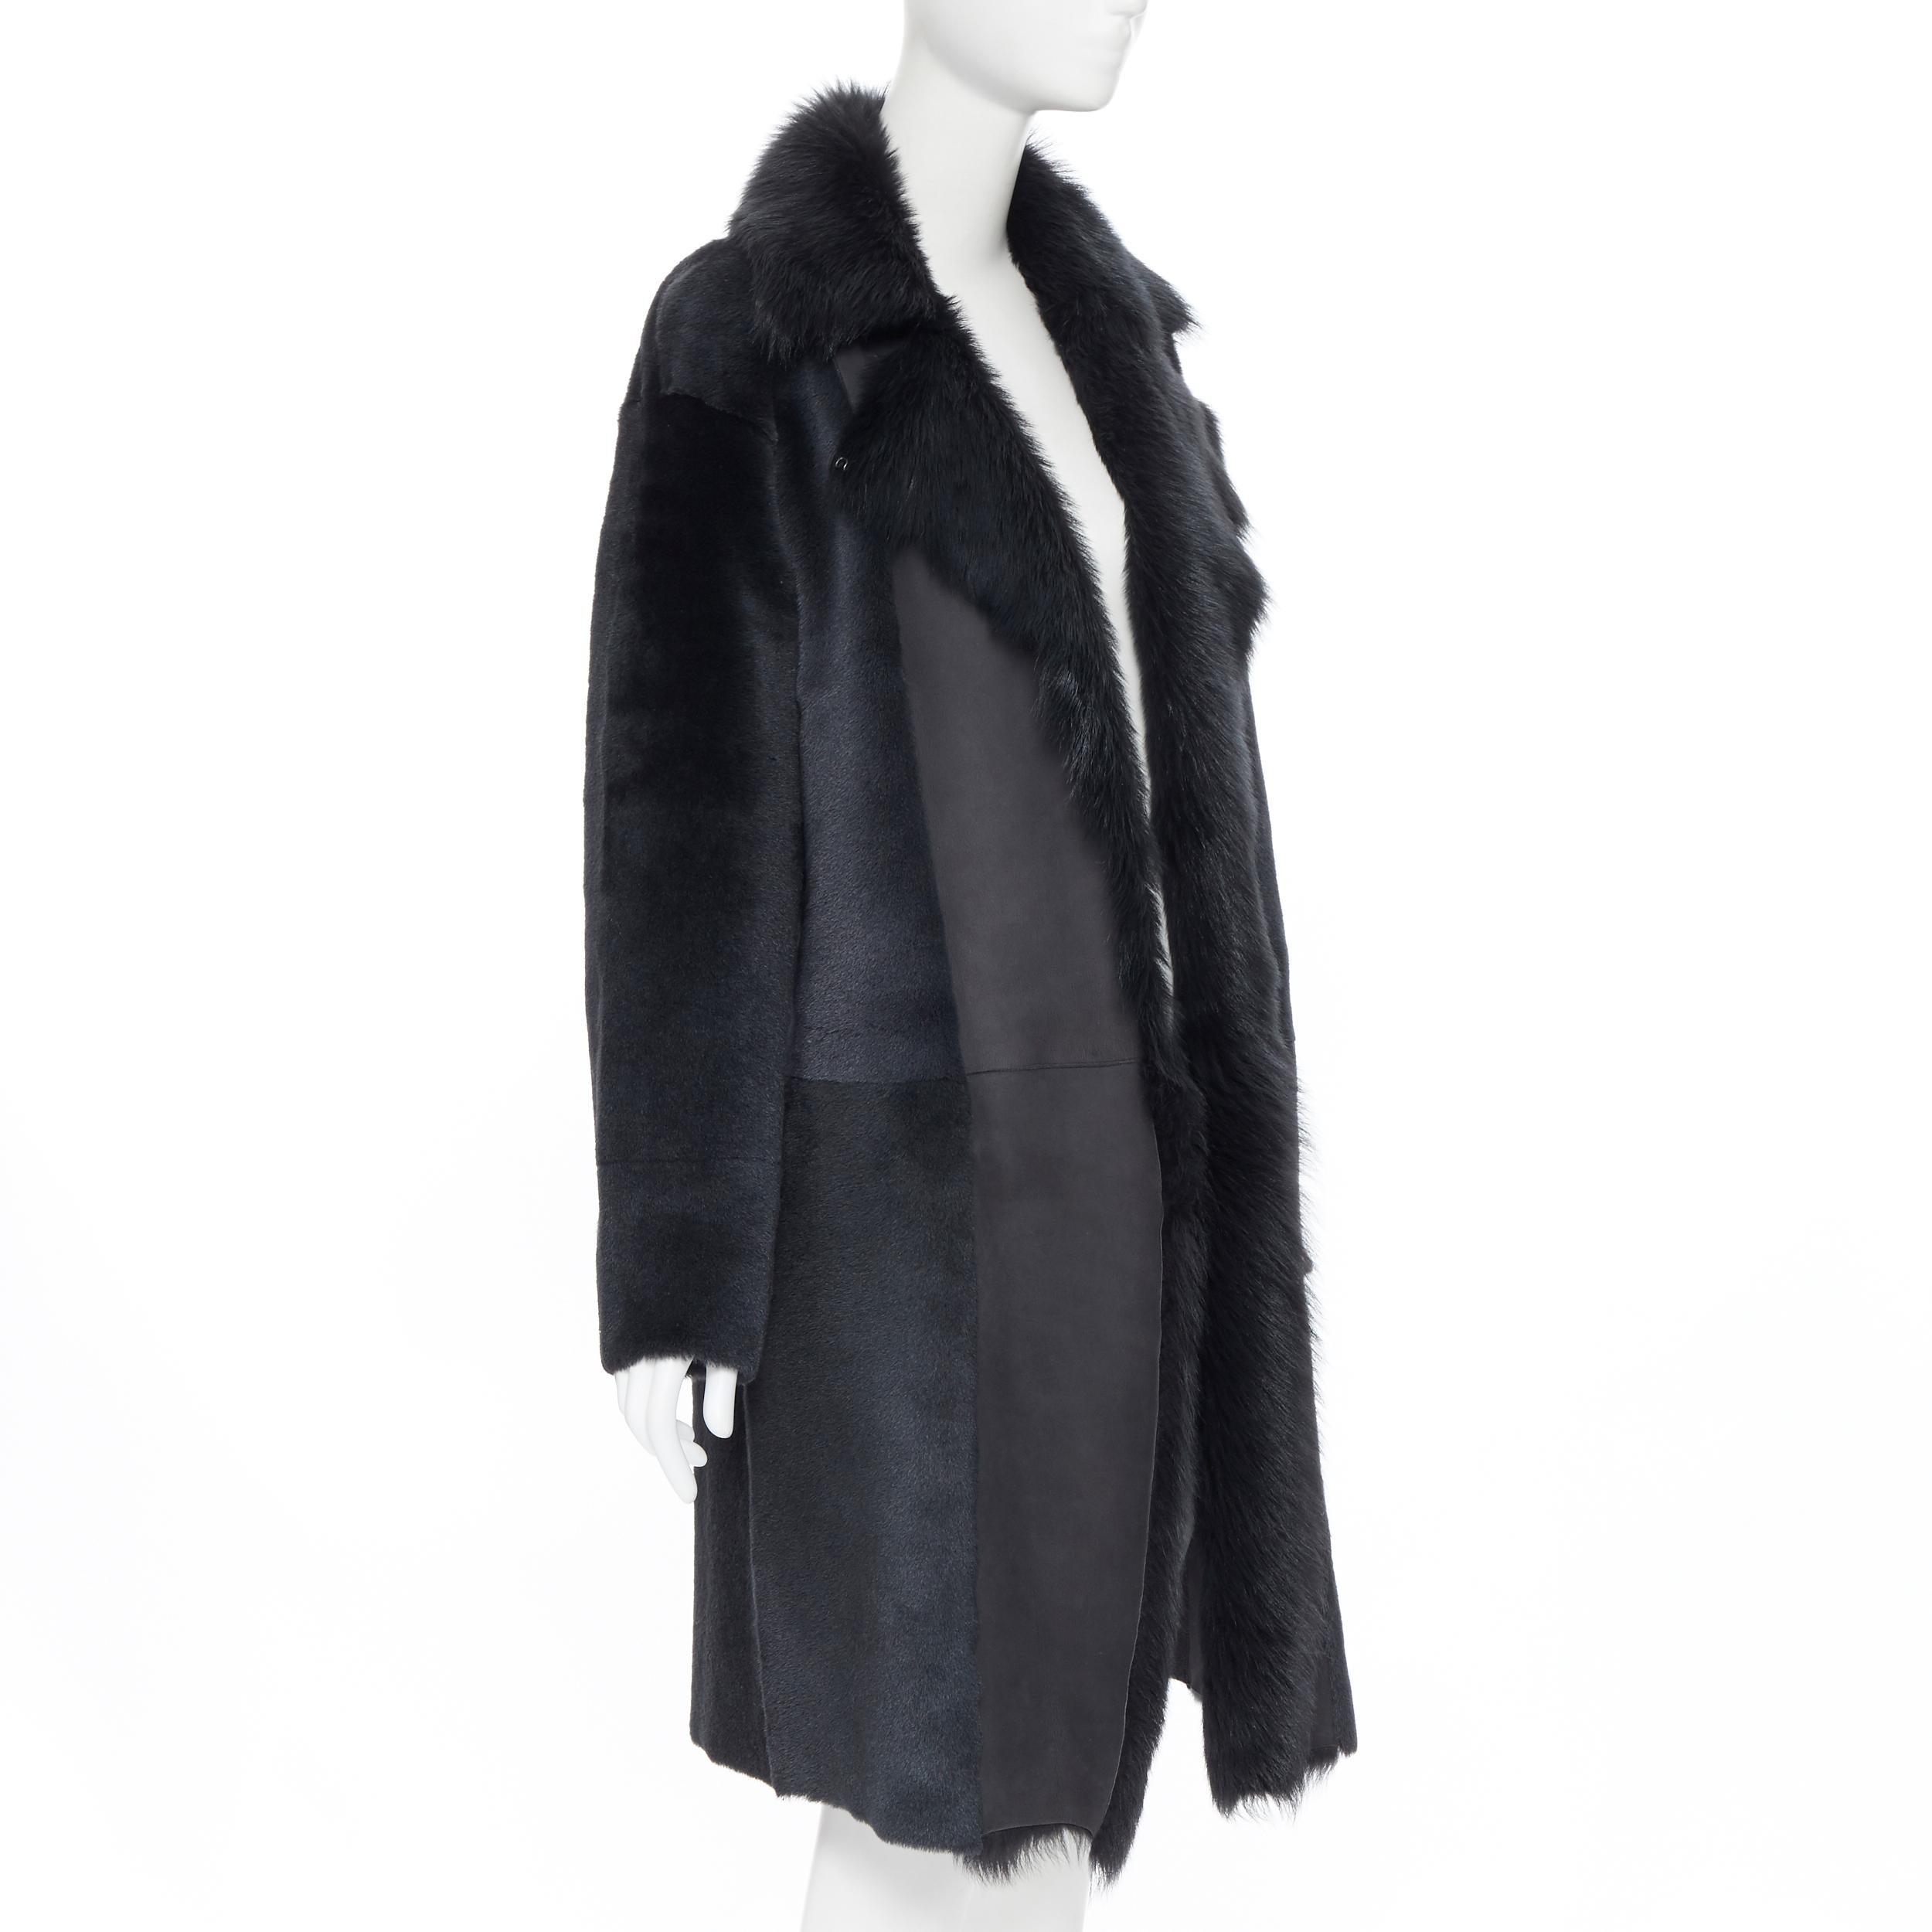 Black THEORY black dyed shearling lamb genuine fur leather oversized winter coat XS